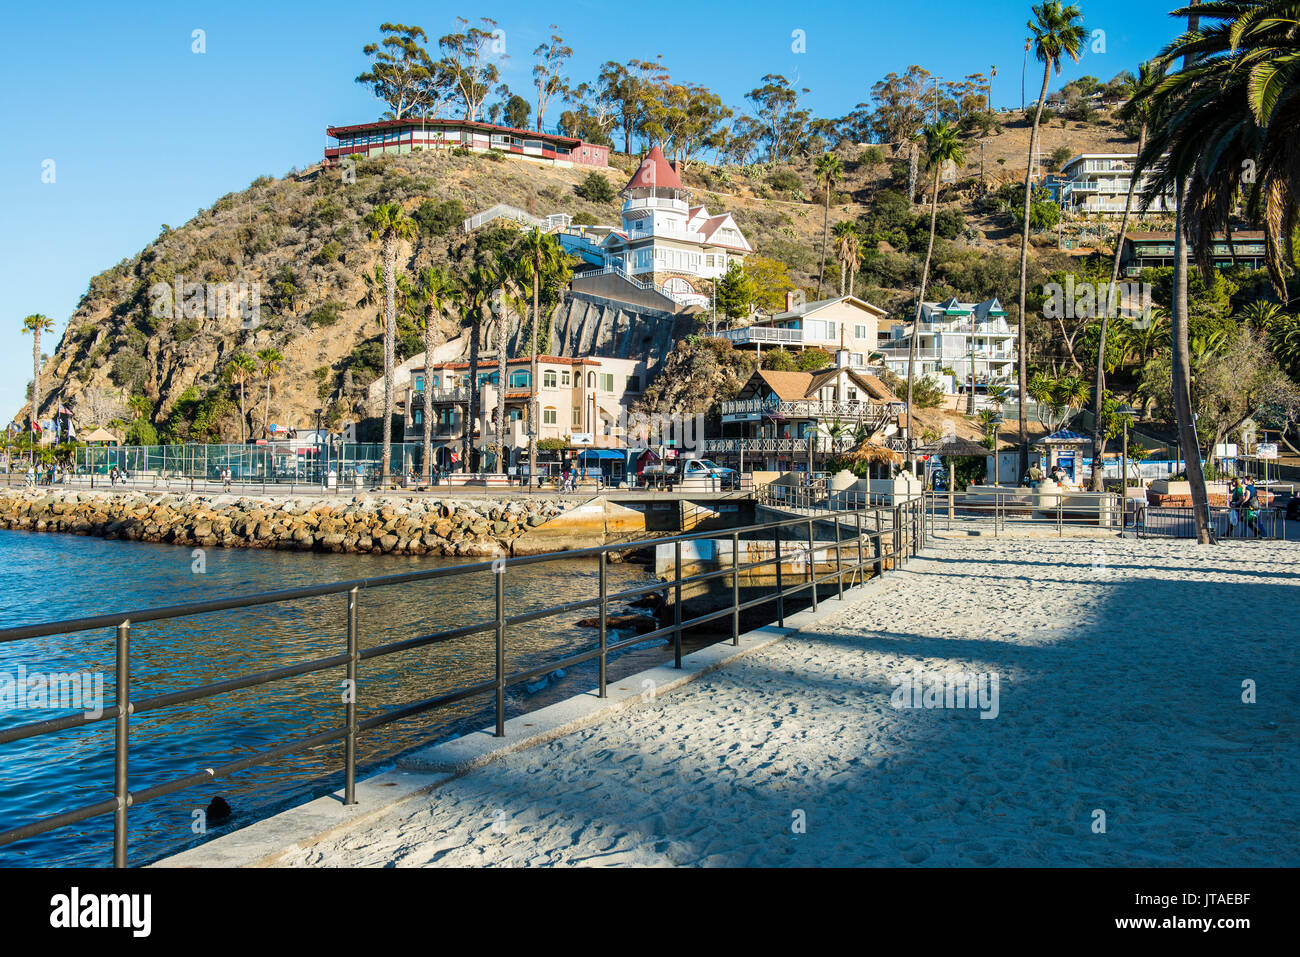 The town of Avalon, Santa Catalina Island, California, United States of America, North America Stock Photo